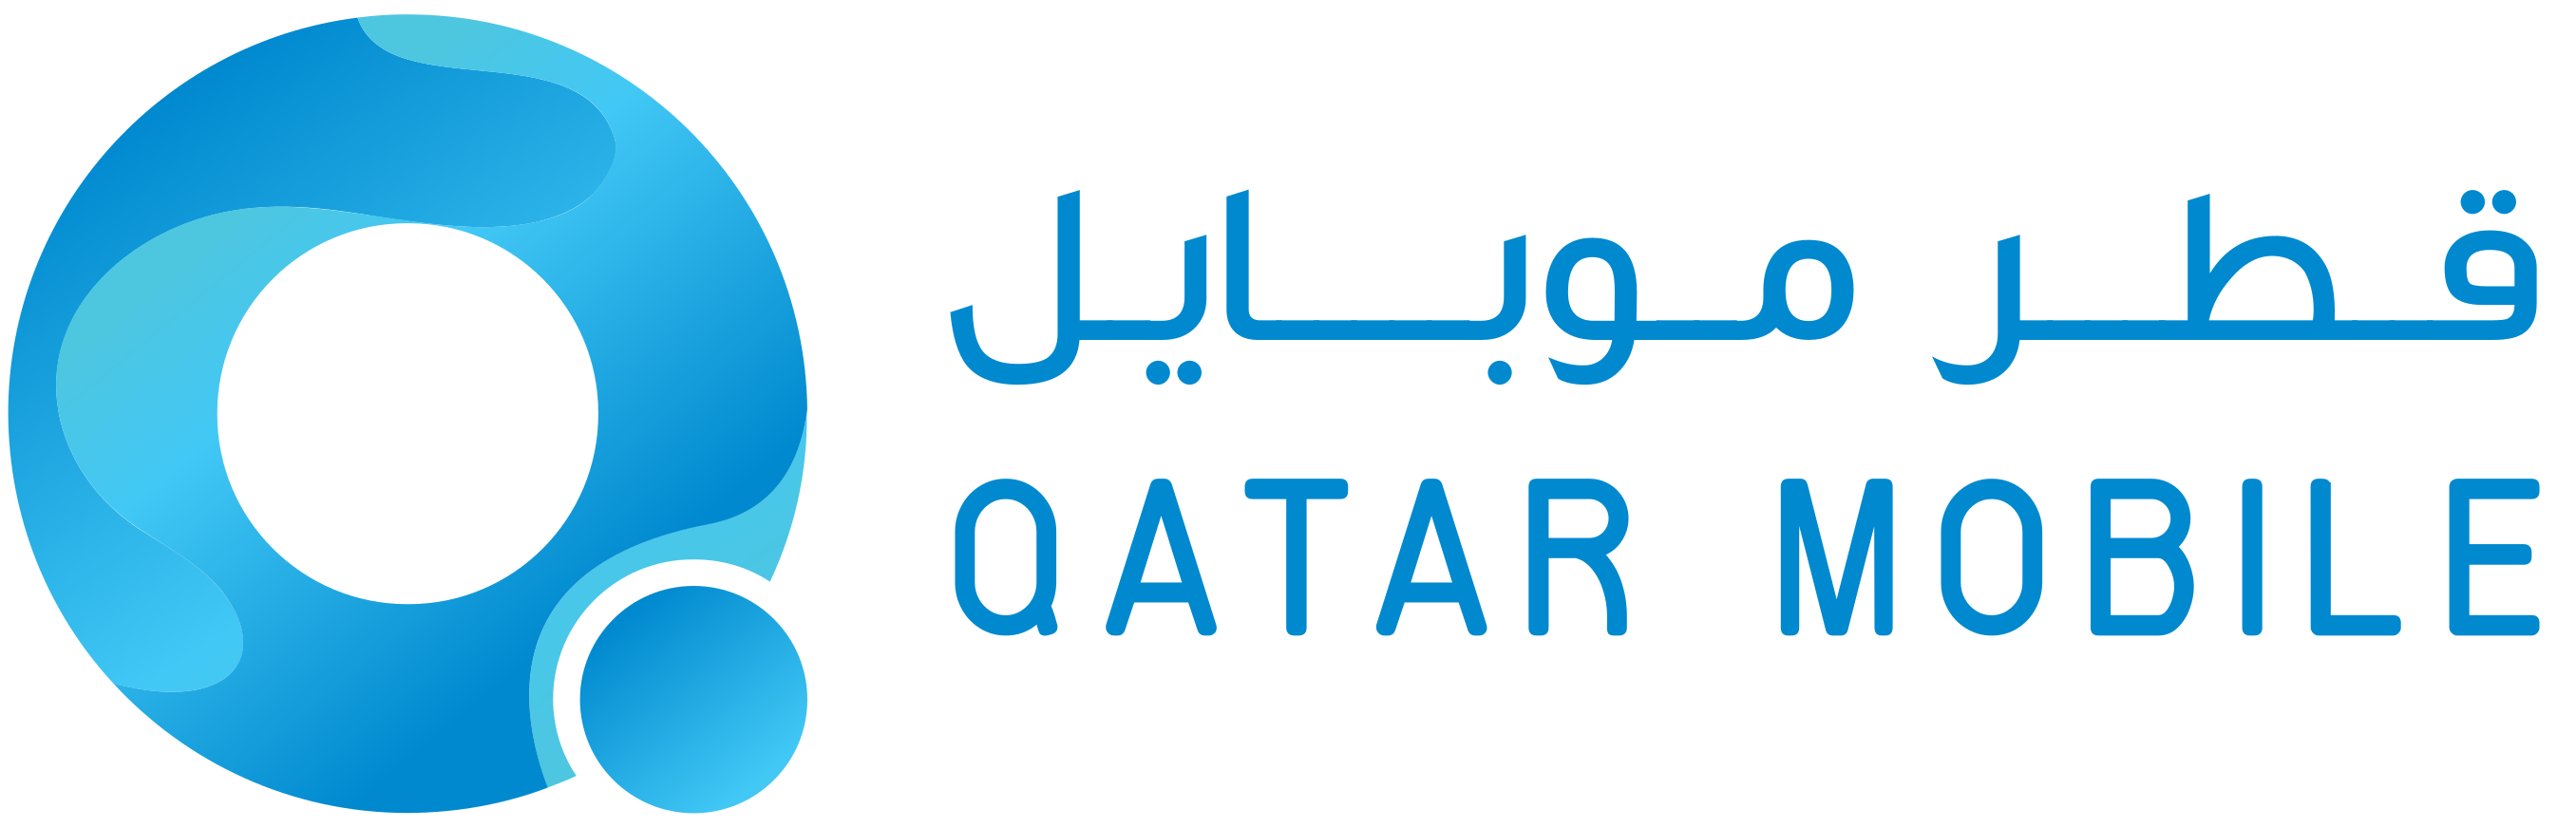 safari mall qatar iphone 11